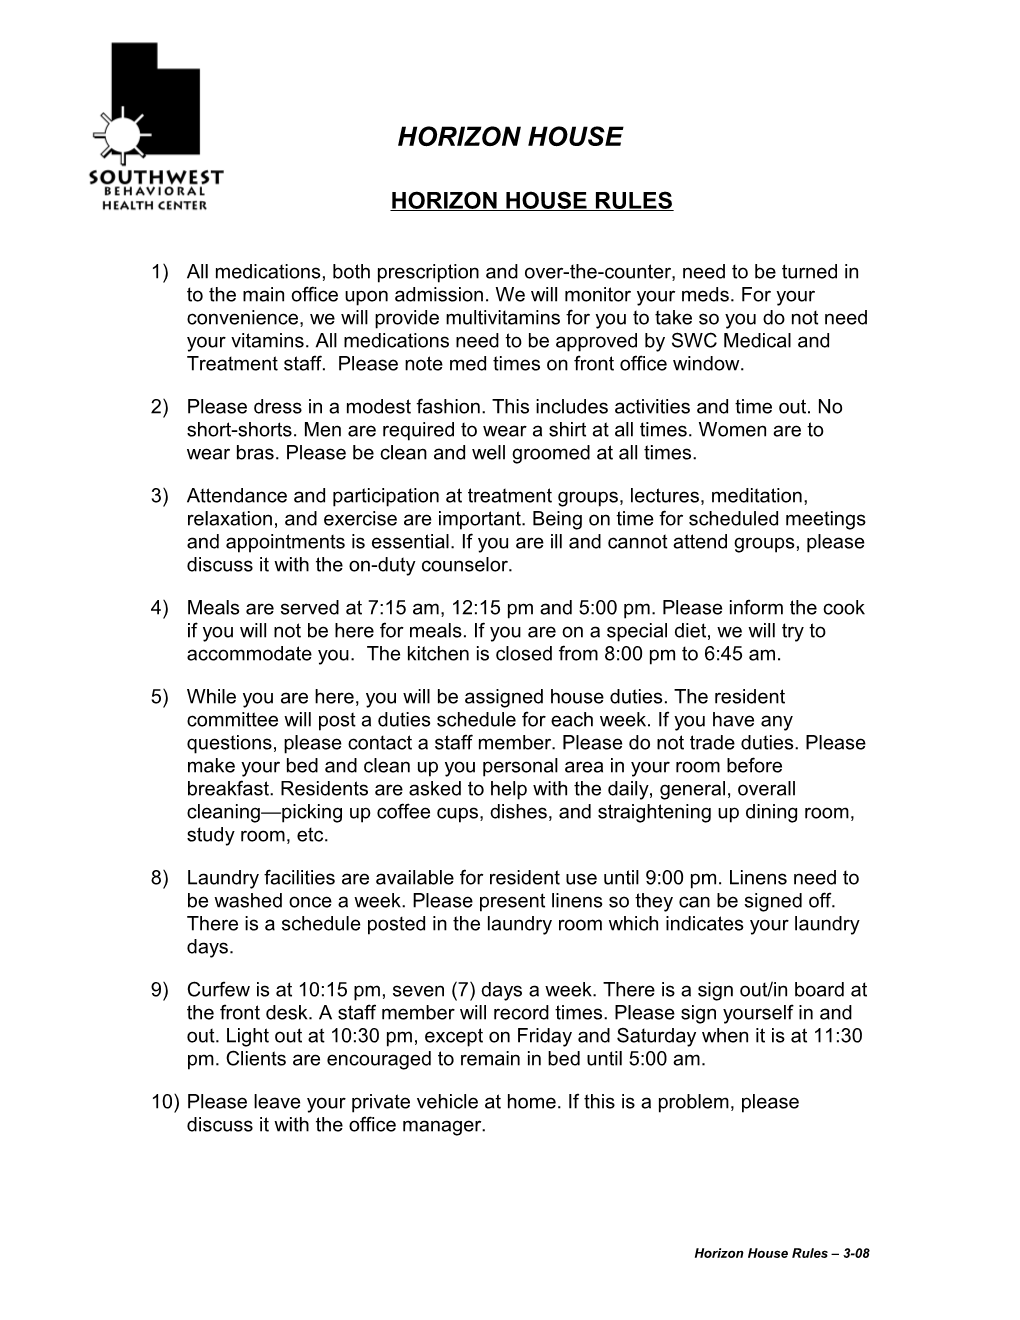 Horizon House Rules